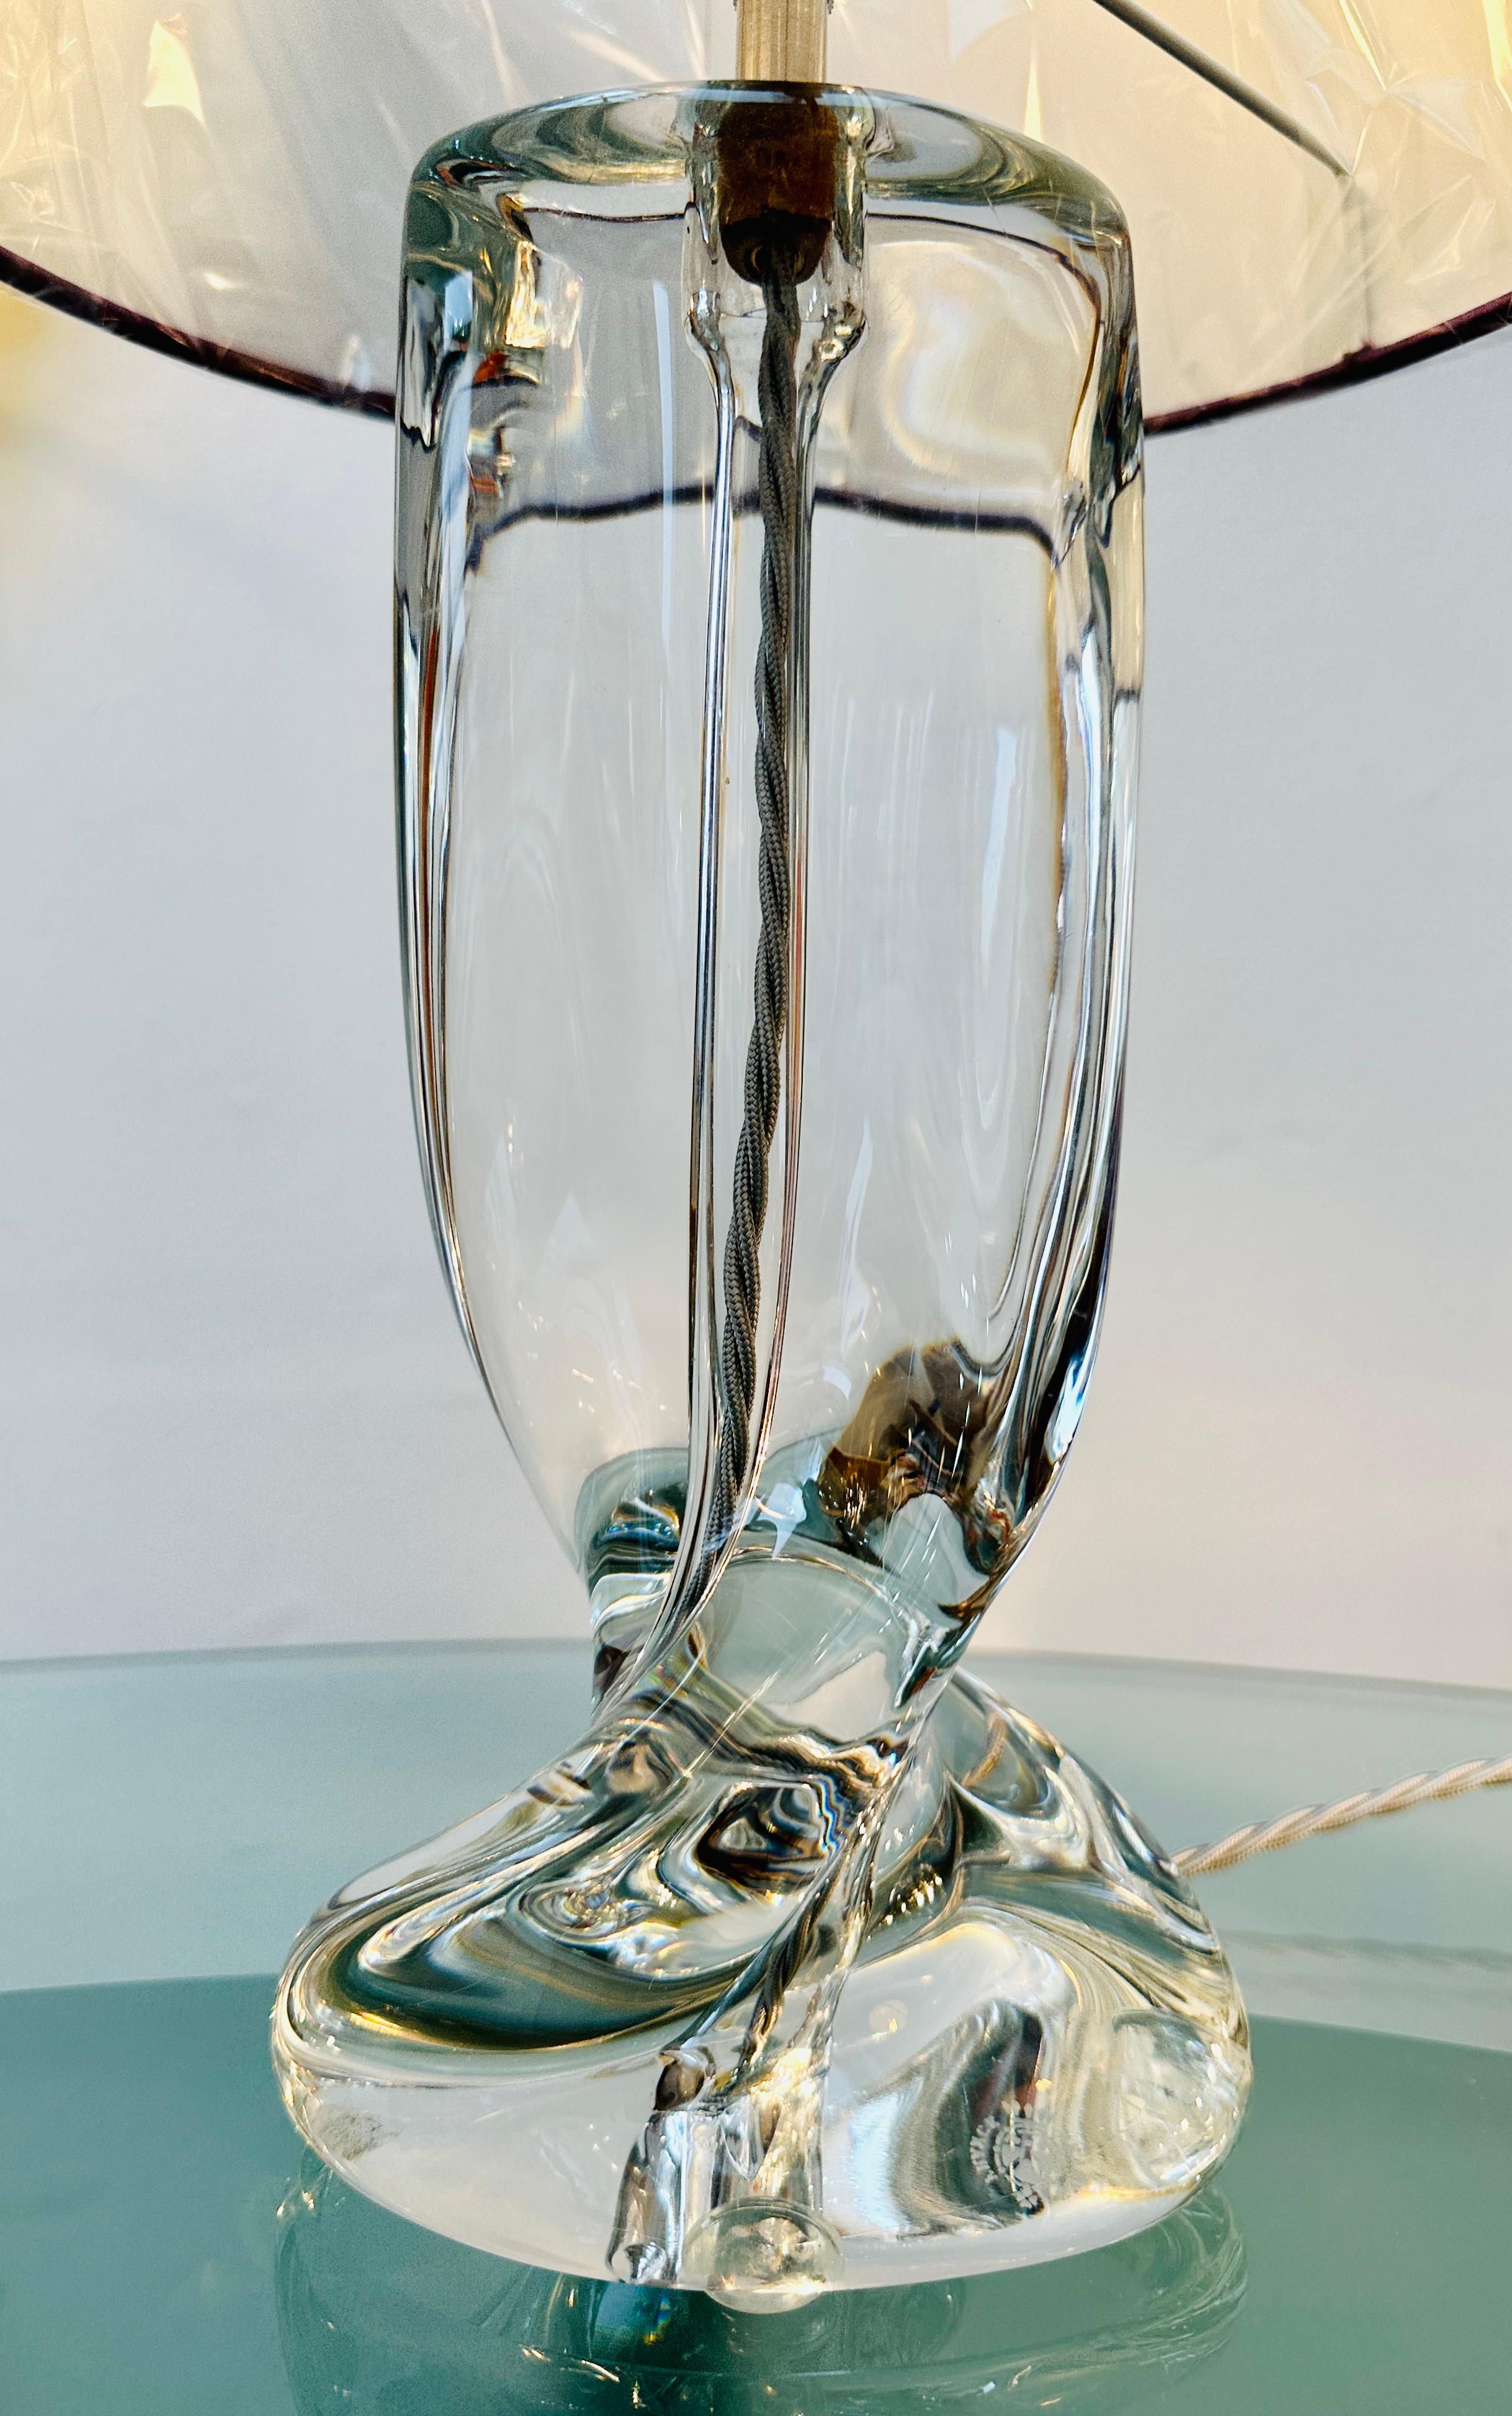 1950s Modernist French Cristalleries De Sèvre Crystal Glass & Chrome Table Lamp For Sale 4